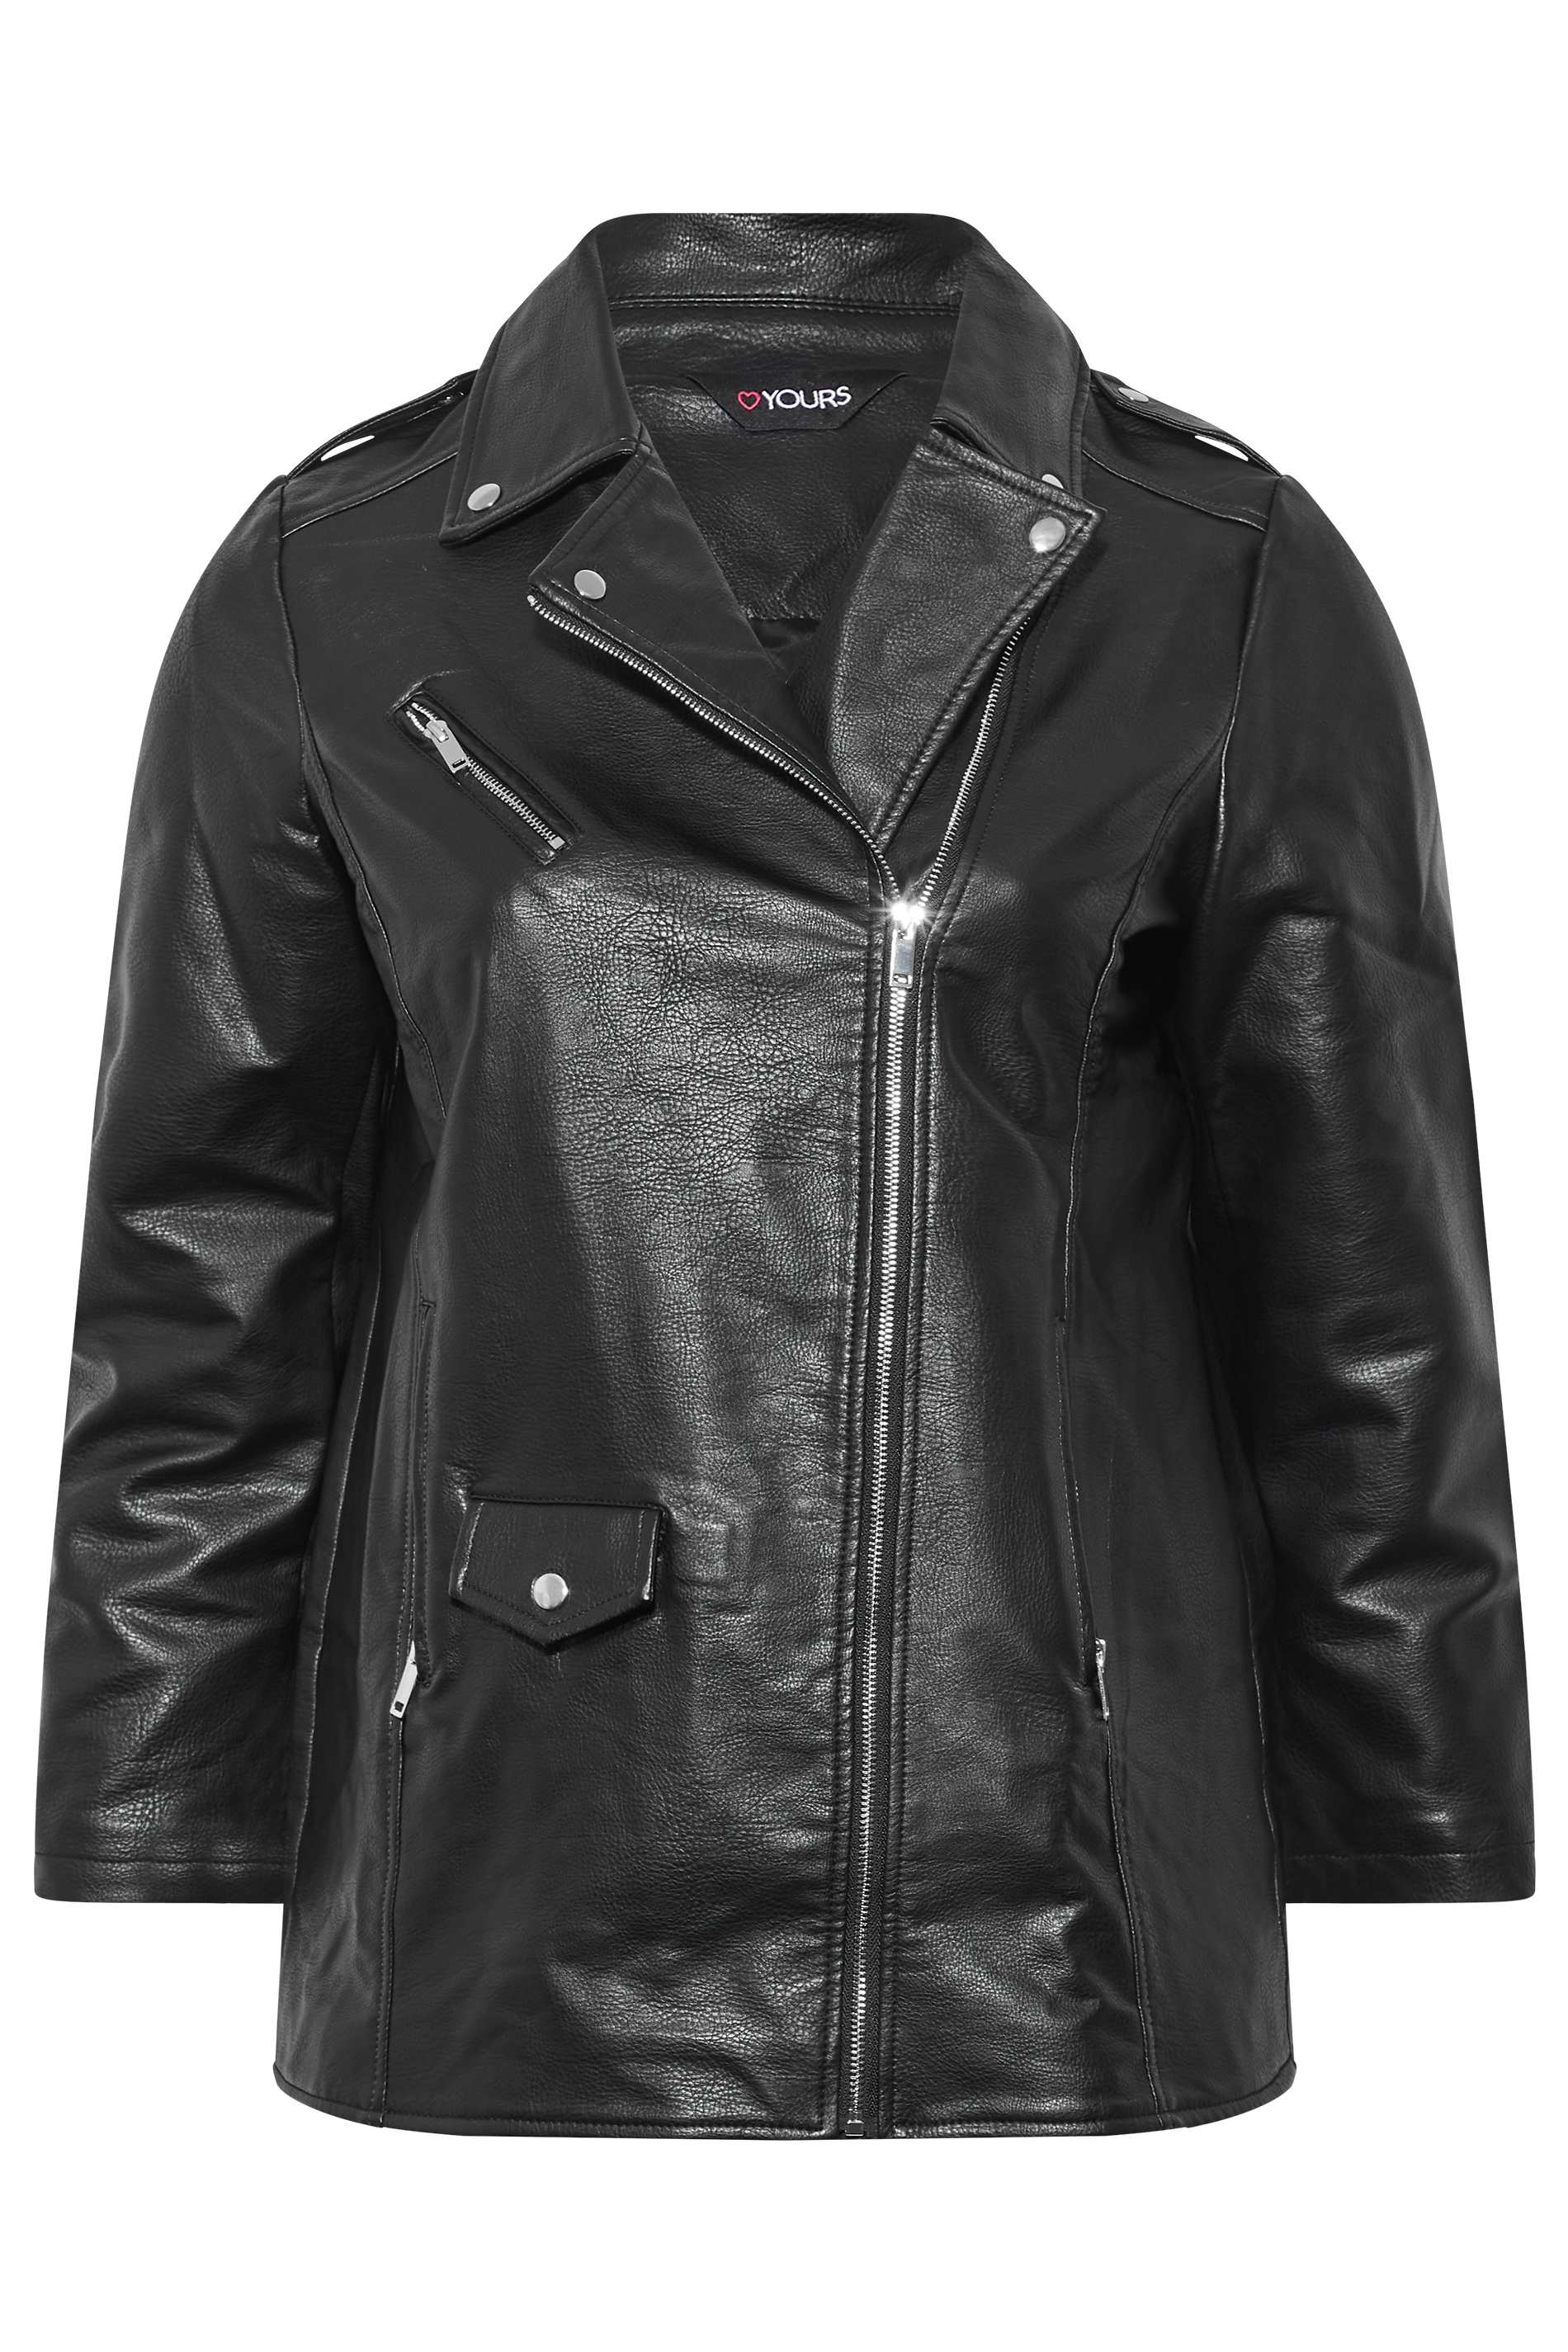 Plus Size Black Faux Leather Longline Biker Jacket | Yours Clothing